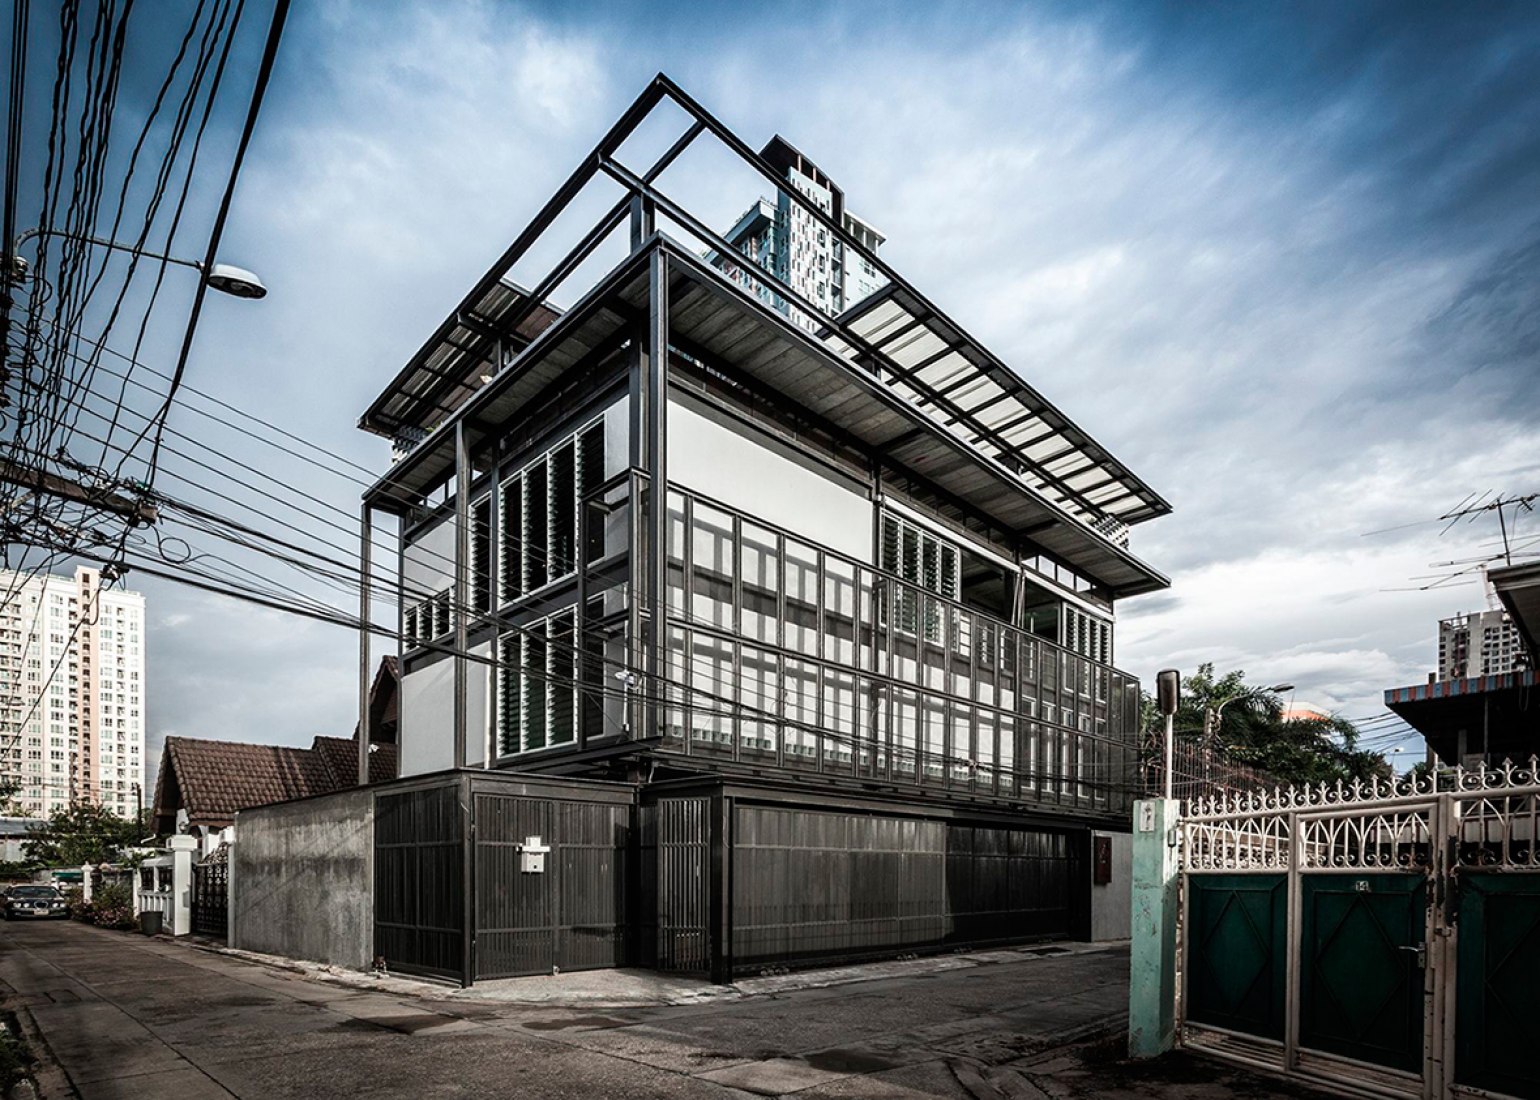 Casa Tinman por Junsekino Architecture. Fotografía © Spaceshift Studio.